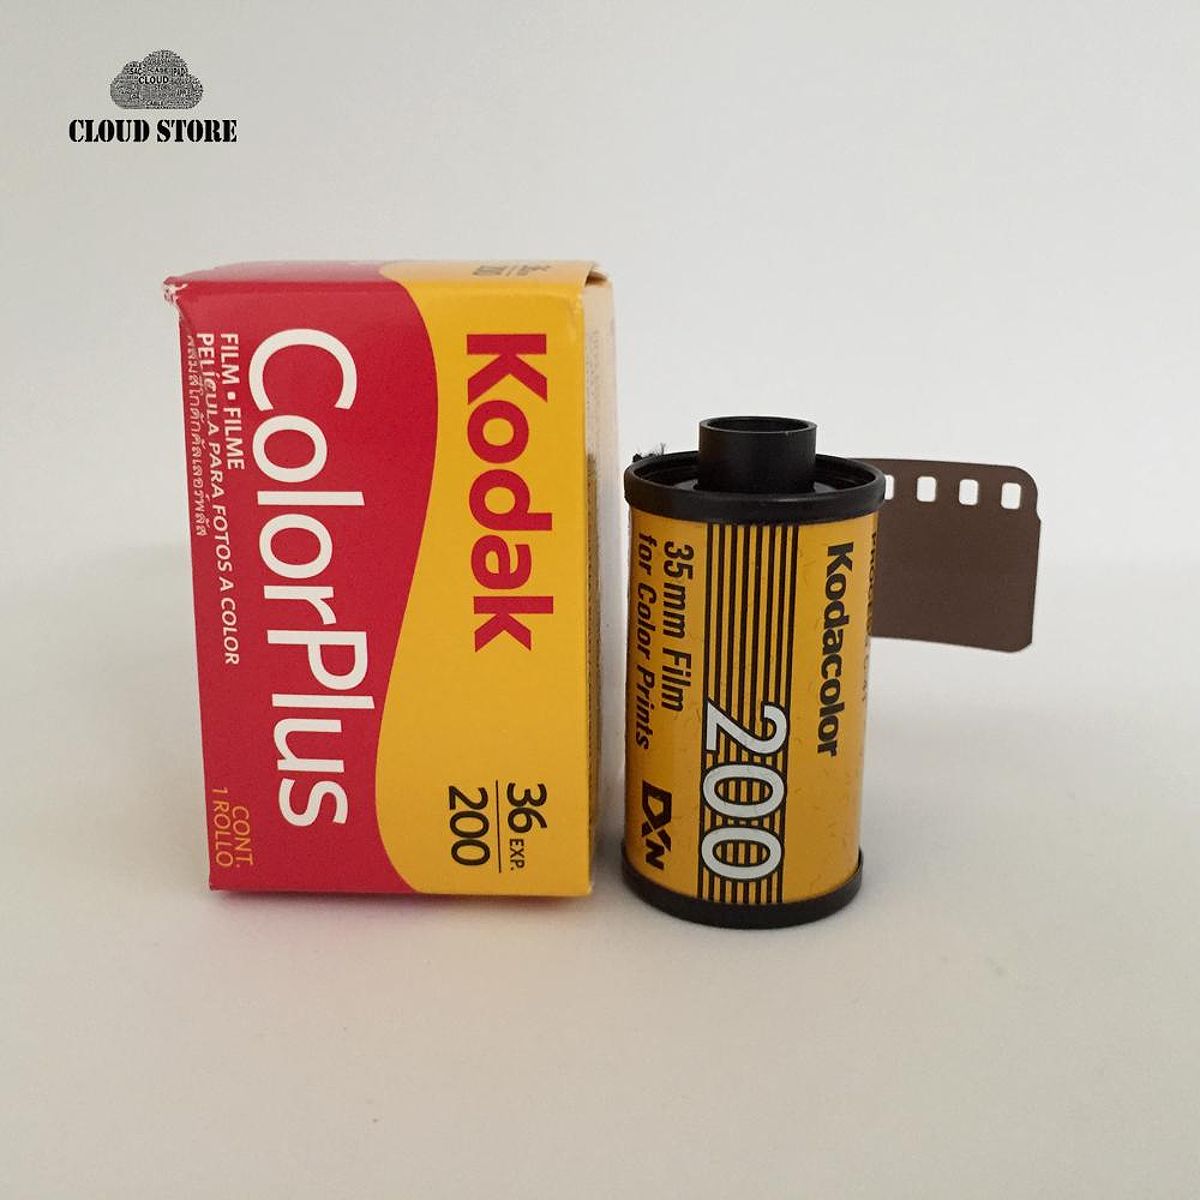 Combo 10 cuộn Film Kodak cho máy ảnh lomo underwater